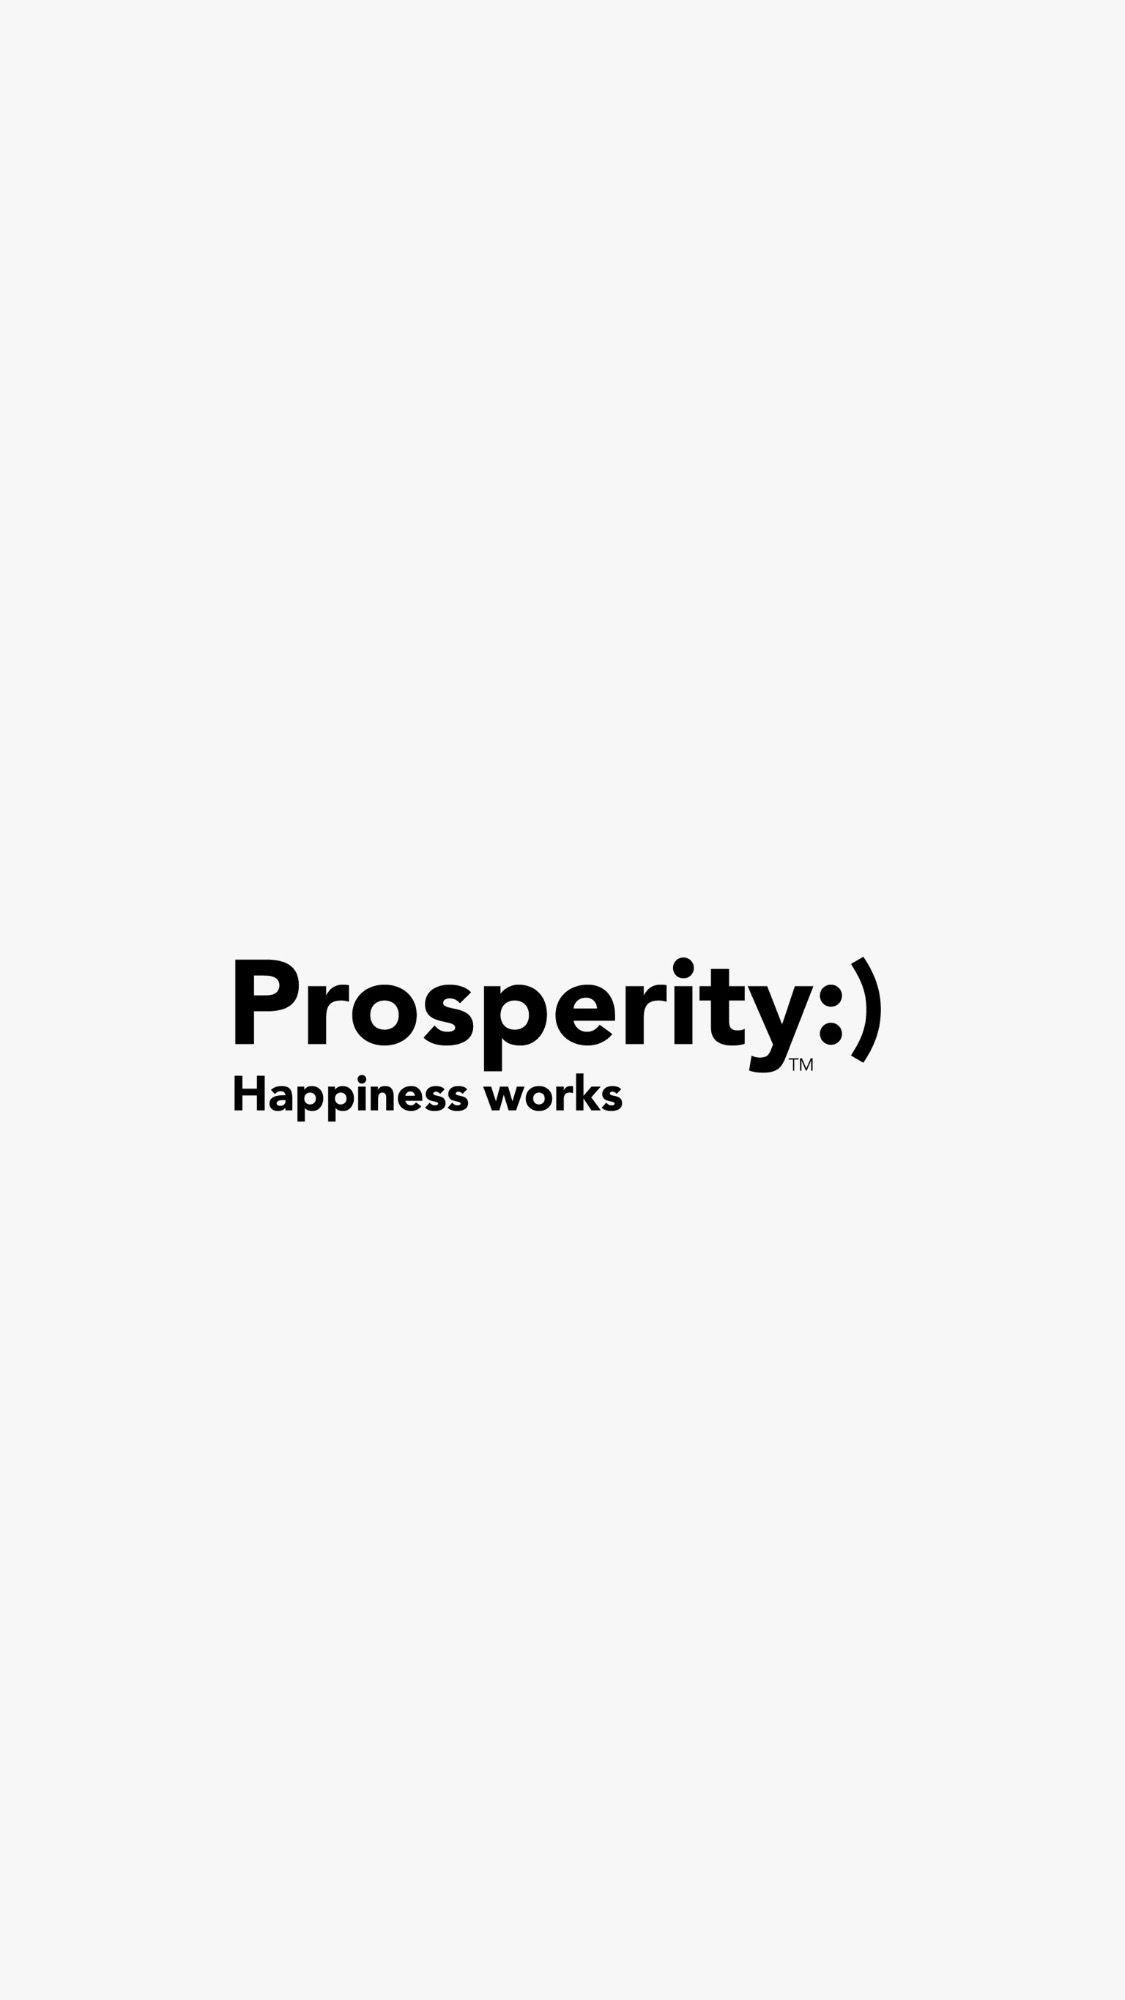 The Prosperity Ethos